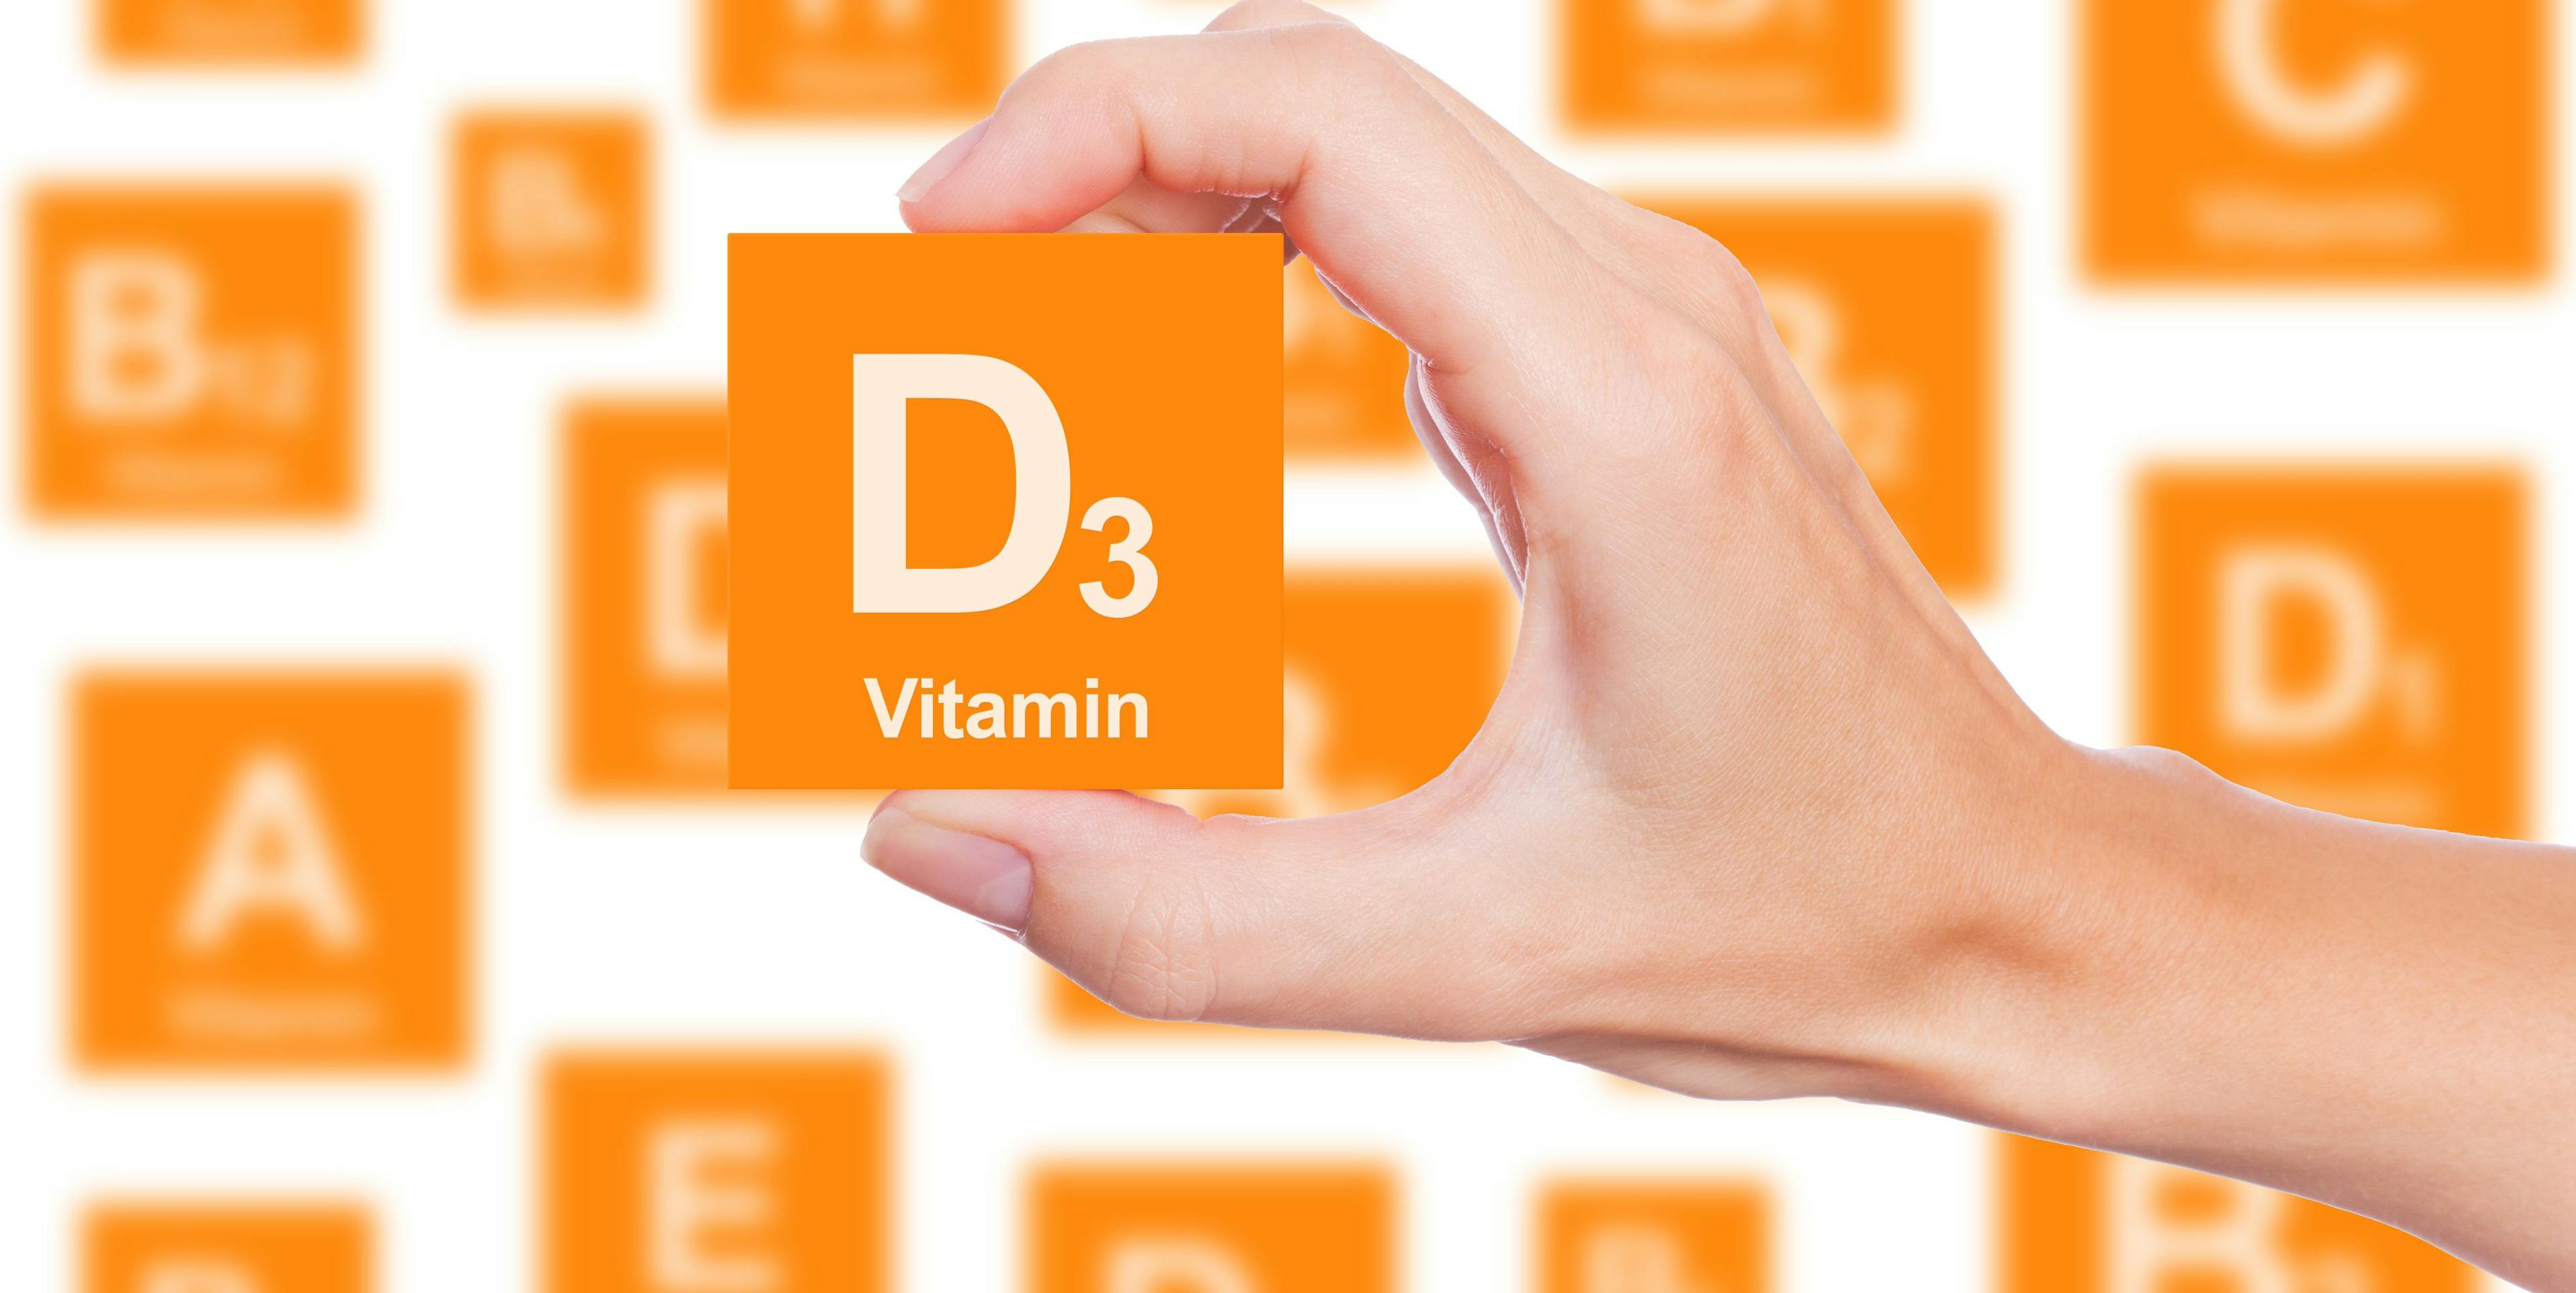 Routine Vitamin D Screening Lacks Benefit